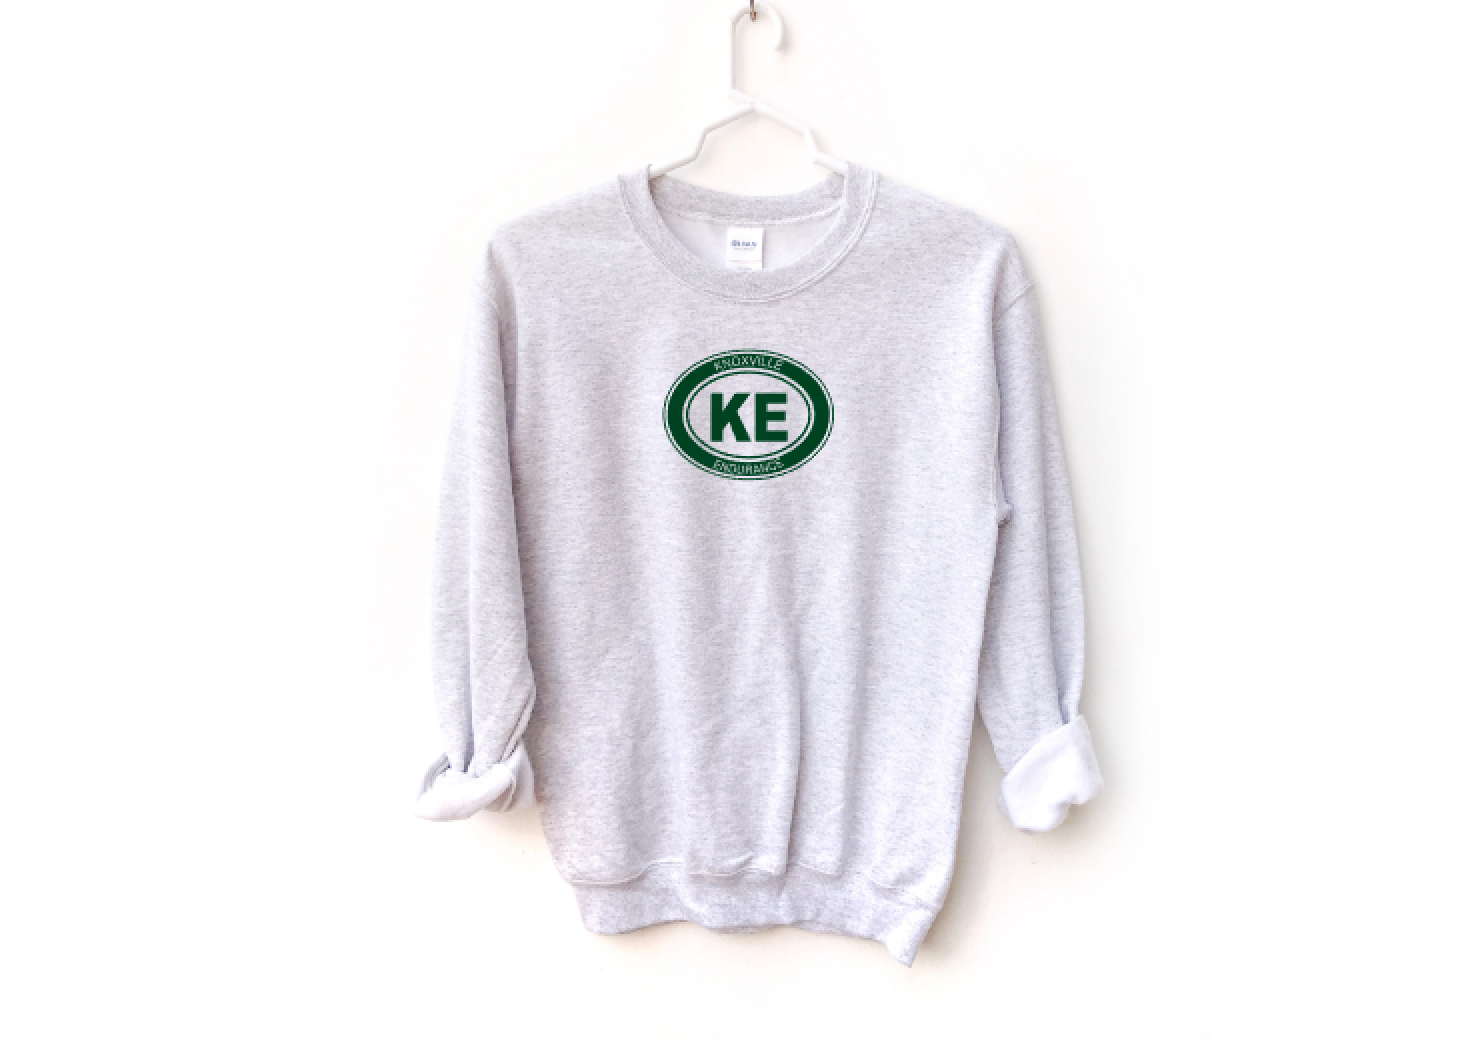 KE oval logo Crewneck Sweatshirt